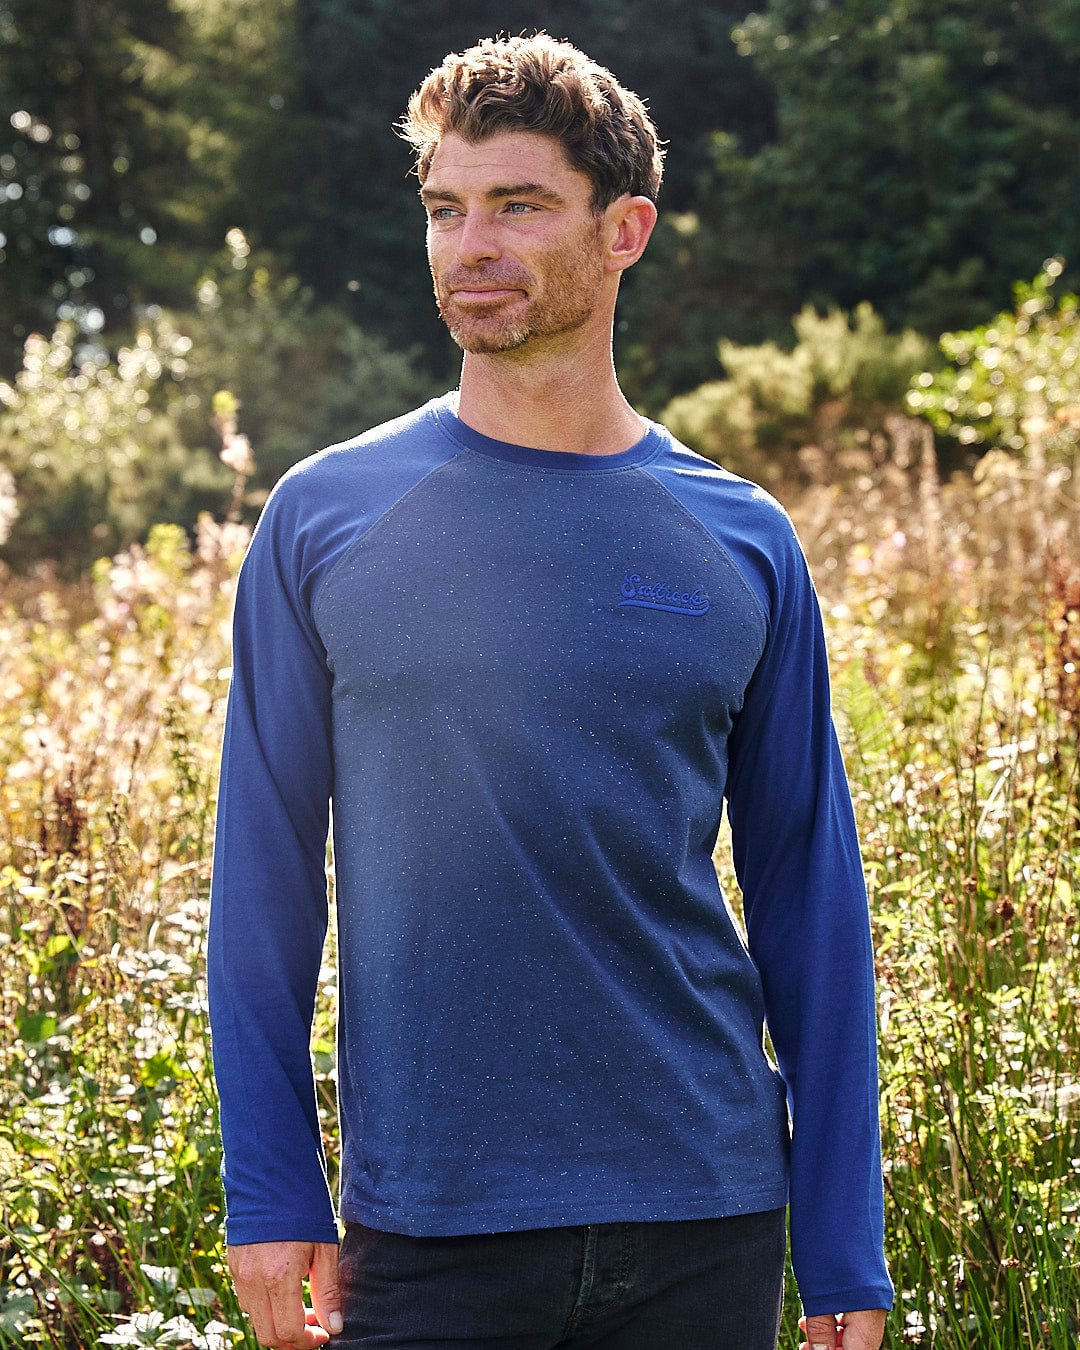 A man wearing a blue long sleeve t-shirt with Saltrock branding standing in a field.